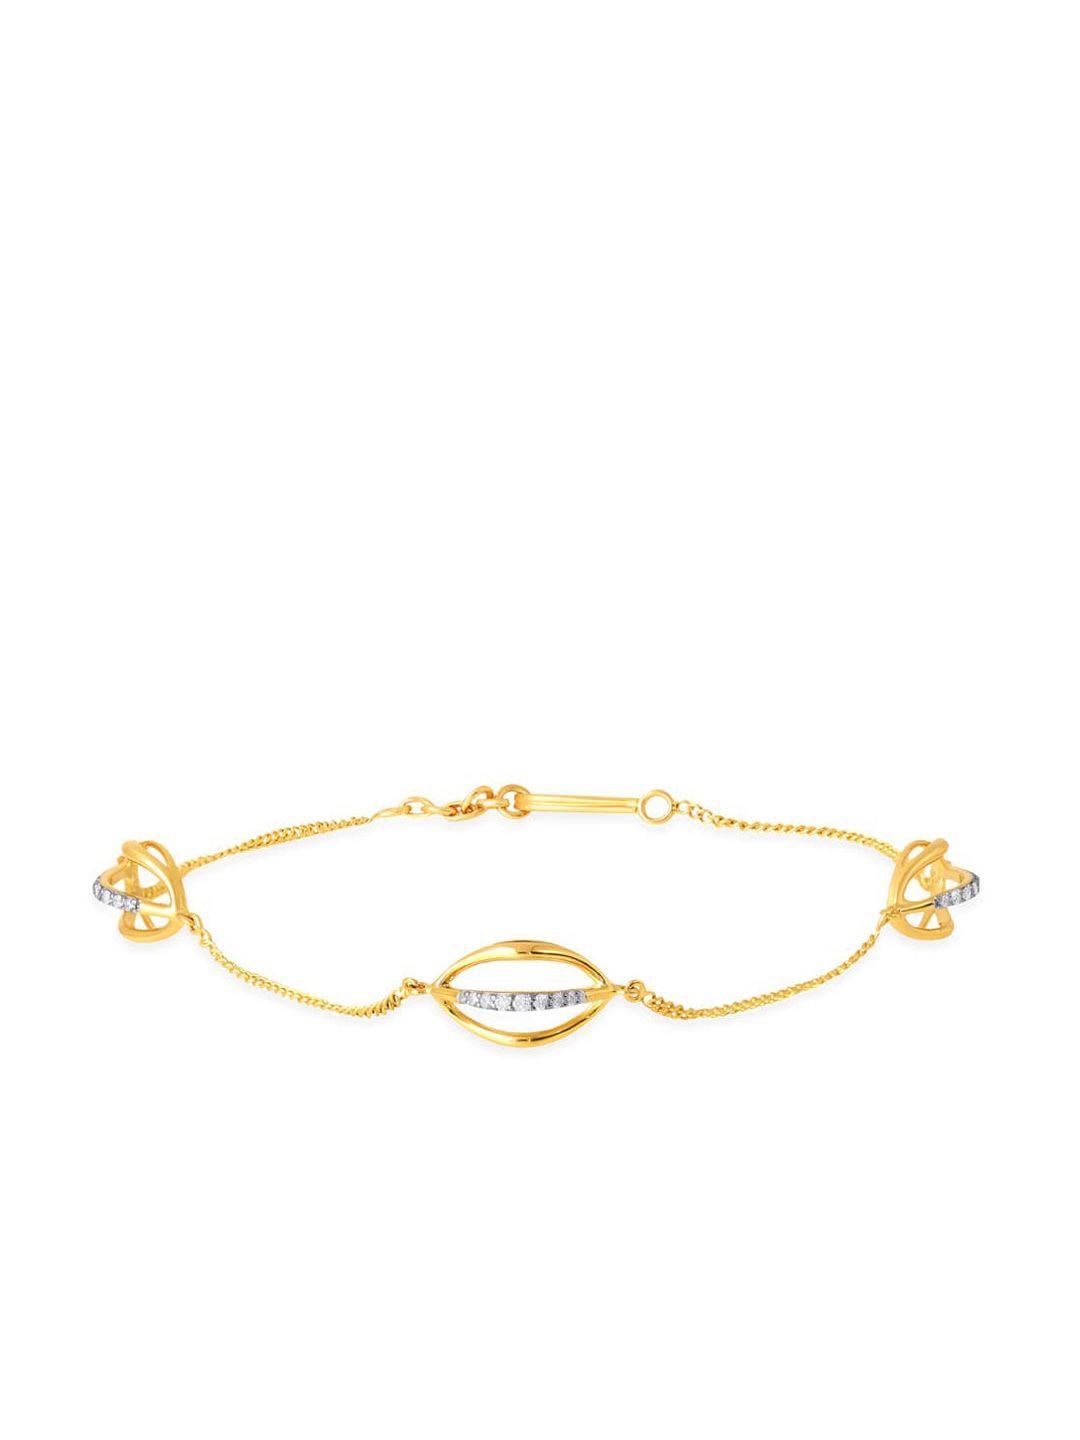 senco gleaming trio 18kt gold diamond-studded bracelet-4.0gm